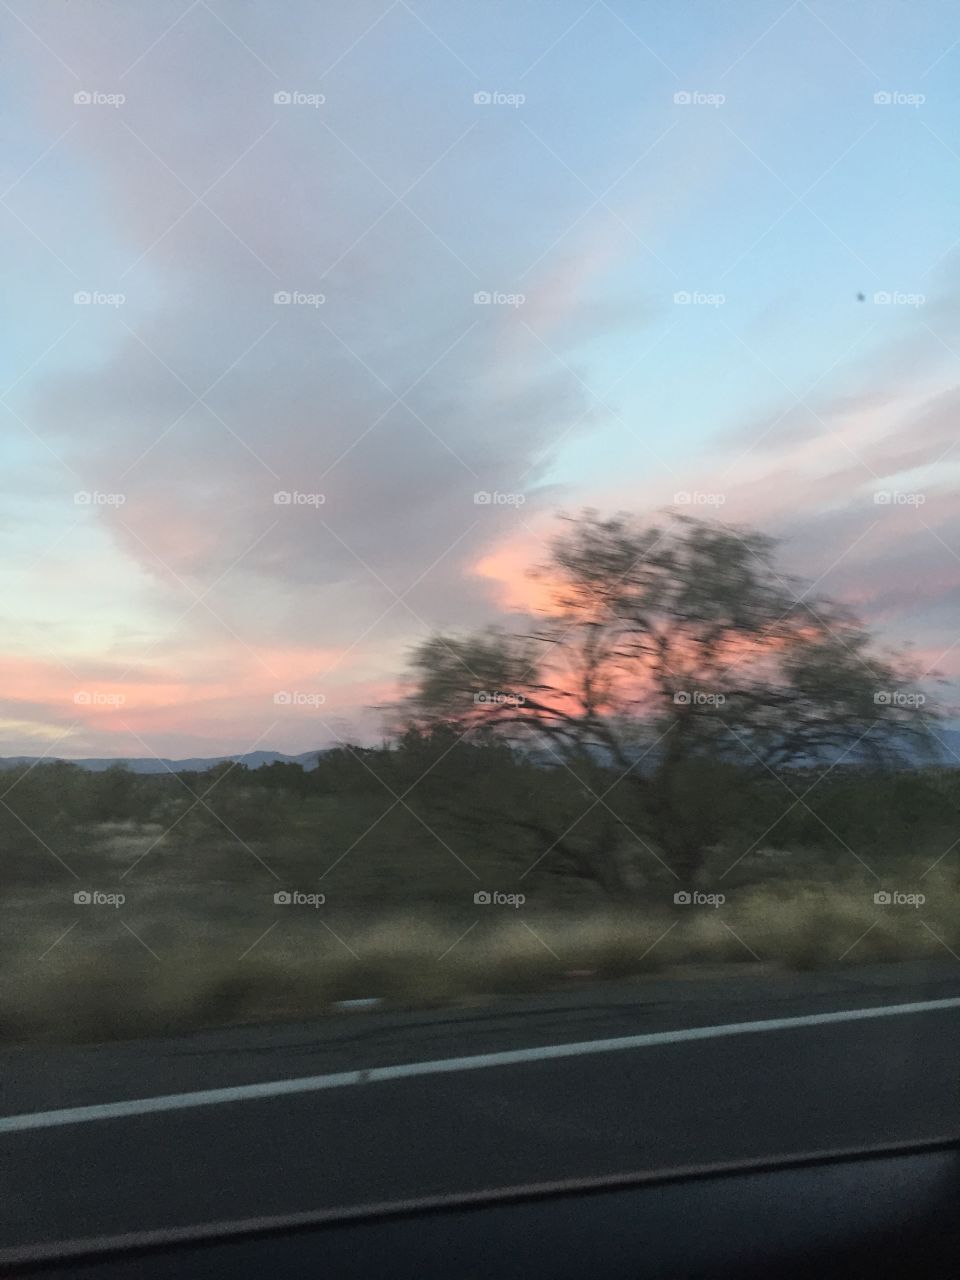 Landscape, Road, Sunset, Light, Sky